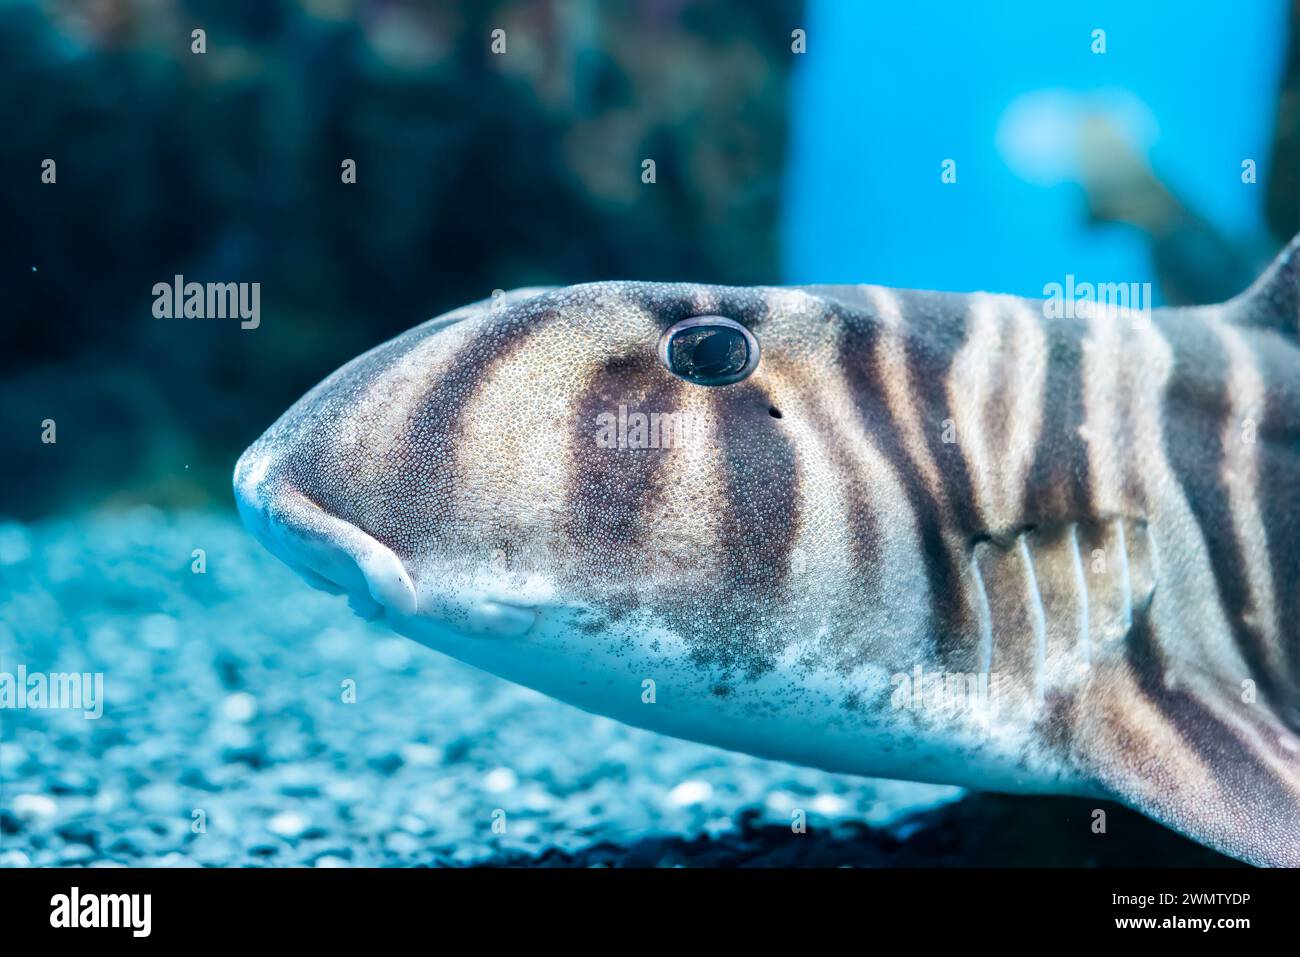 Zebra bullhead shark (Heterodontus zebra) swimming in the sea Stock Photo